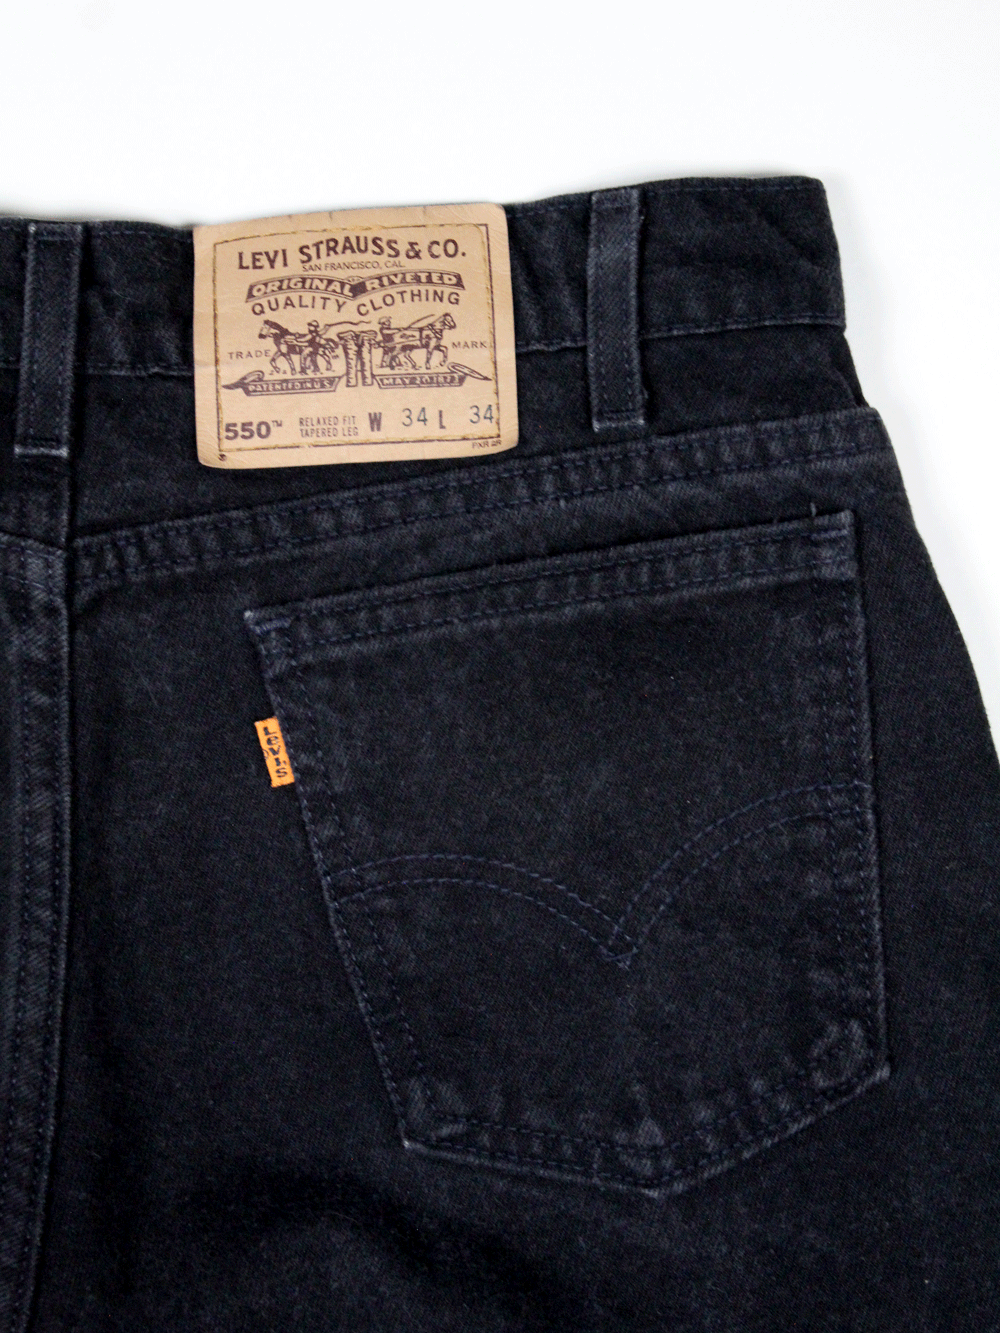 Levi's 550 Vintage Jeans (Orange Label)